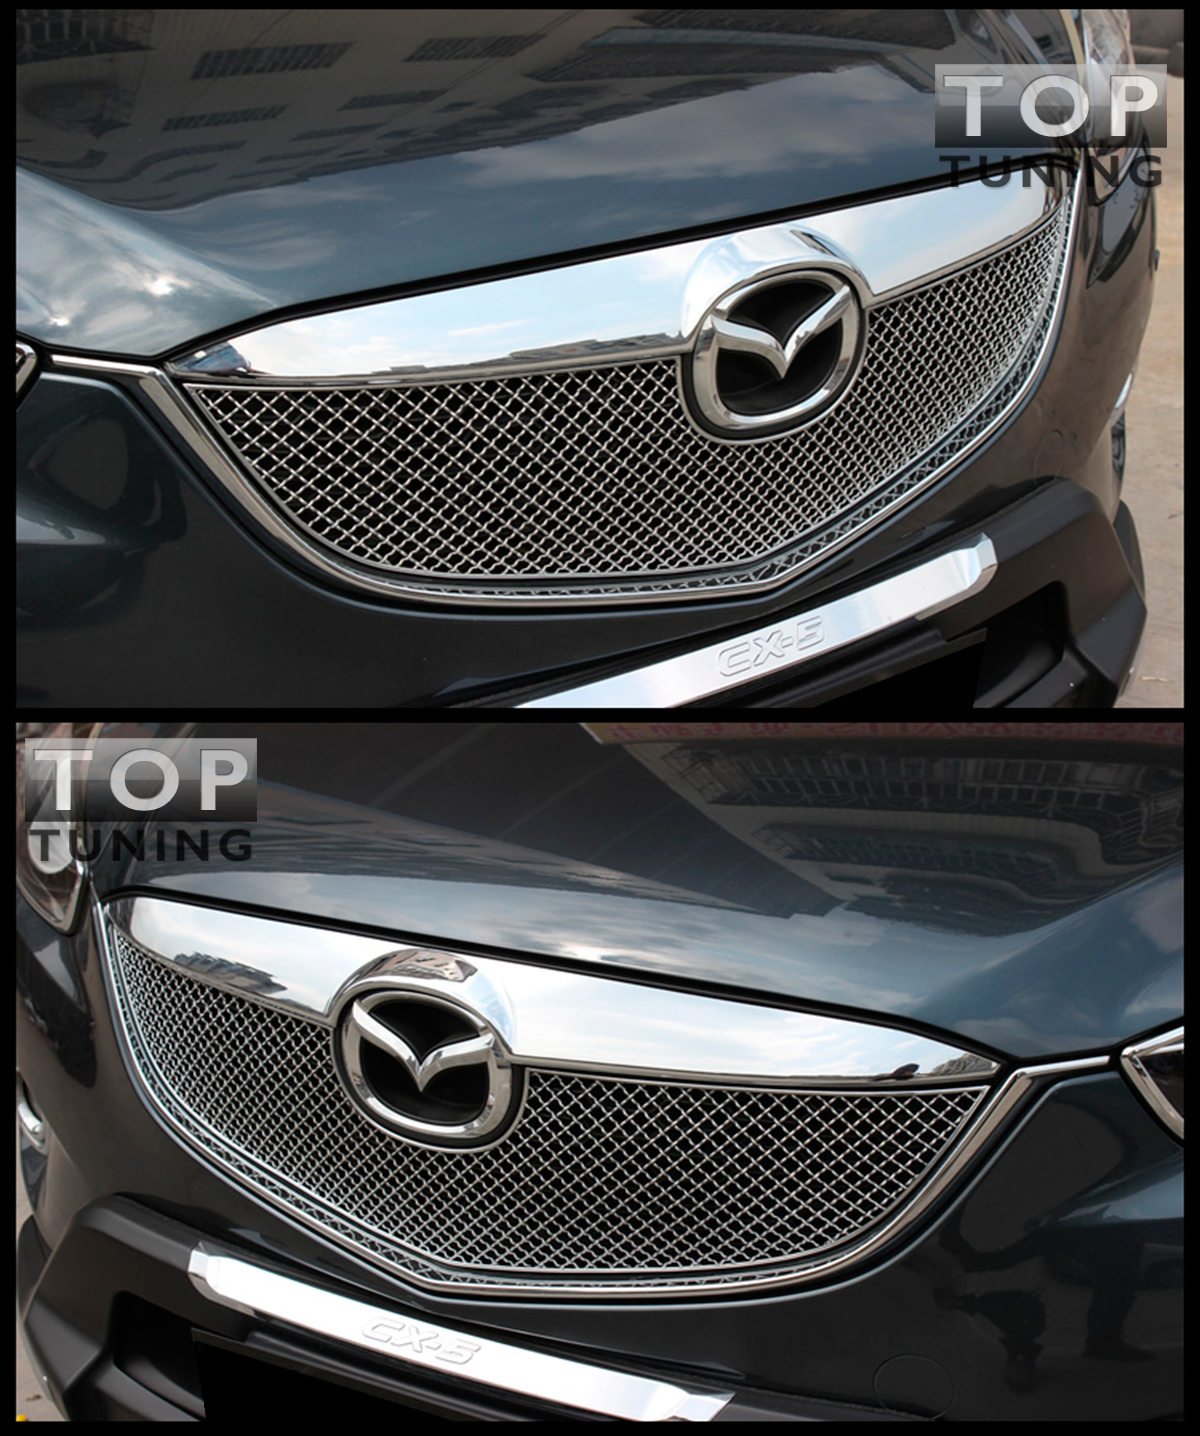 Декоративная решетка радиатора Бентли Стайл - Тюнинг Mazda CX-5. 